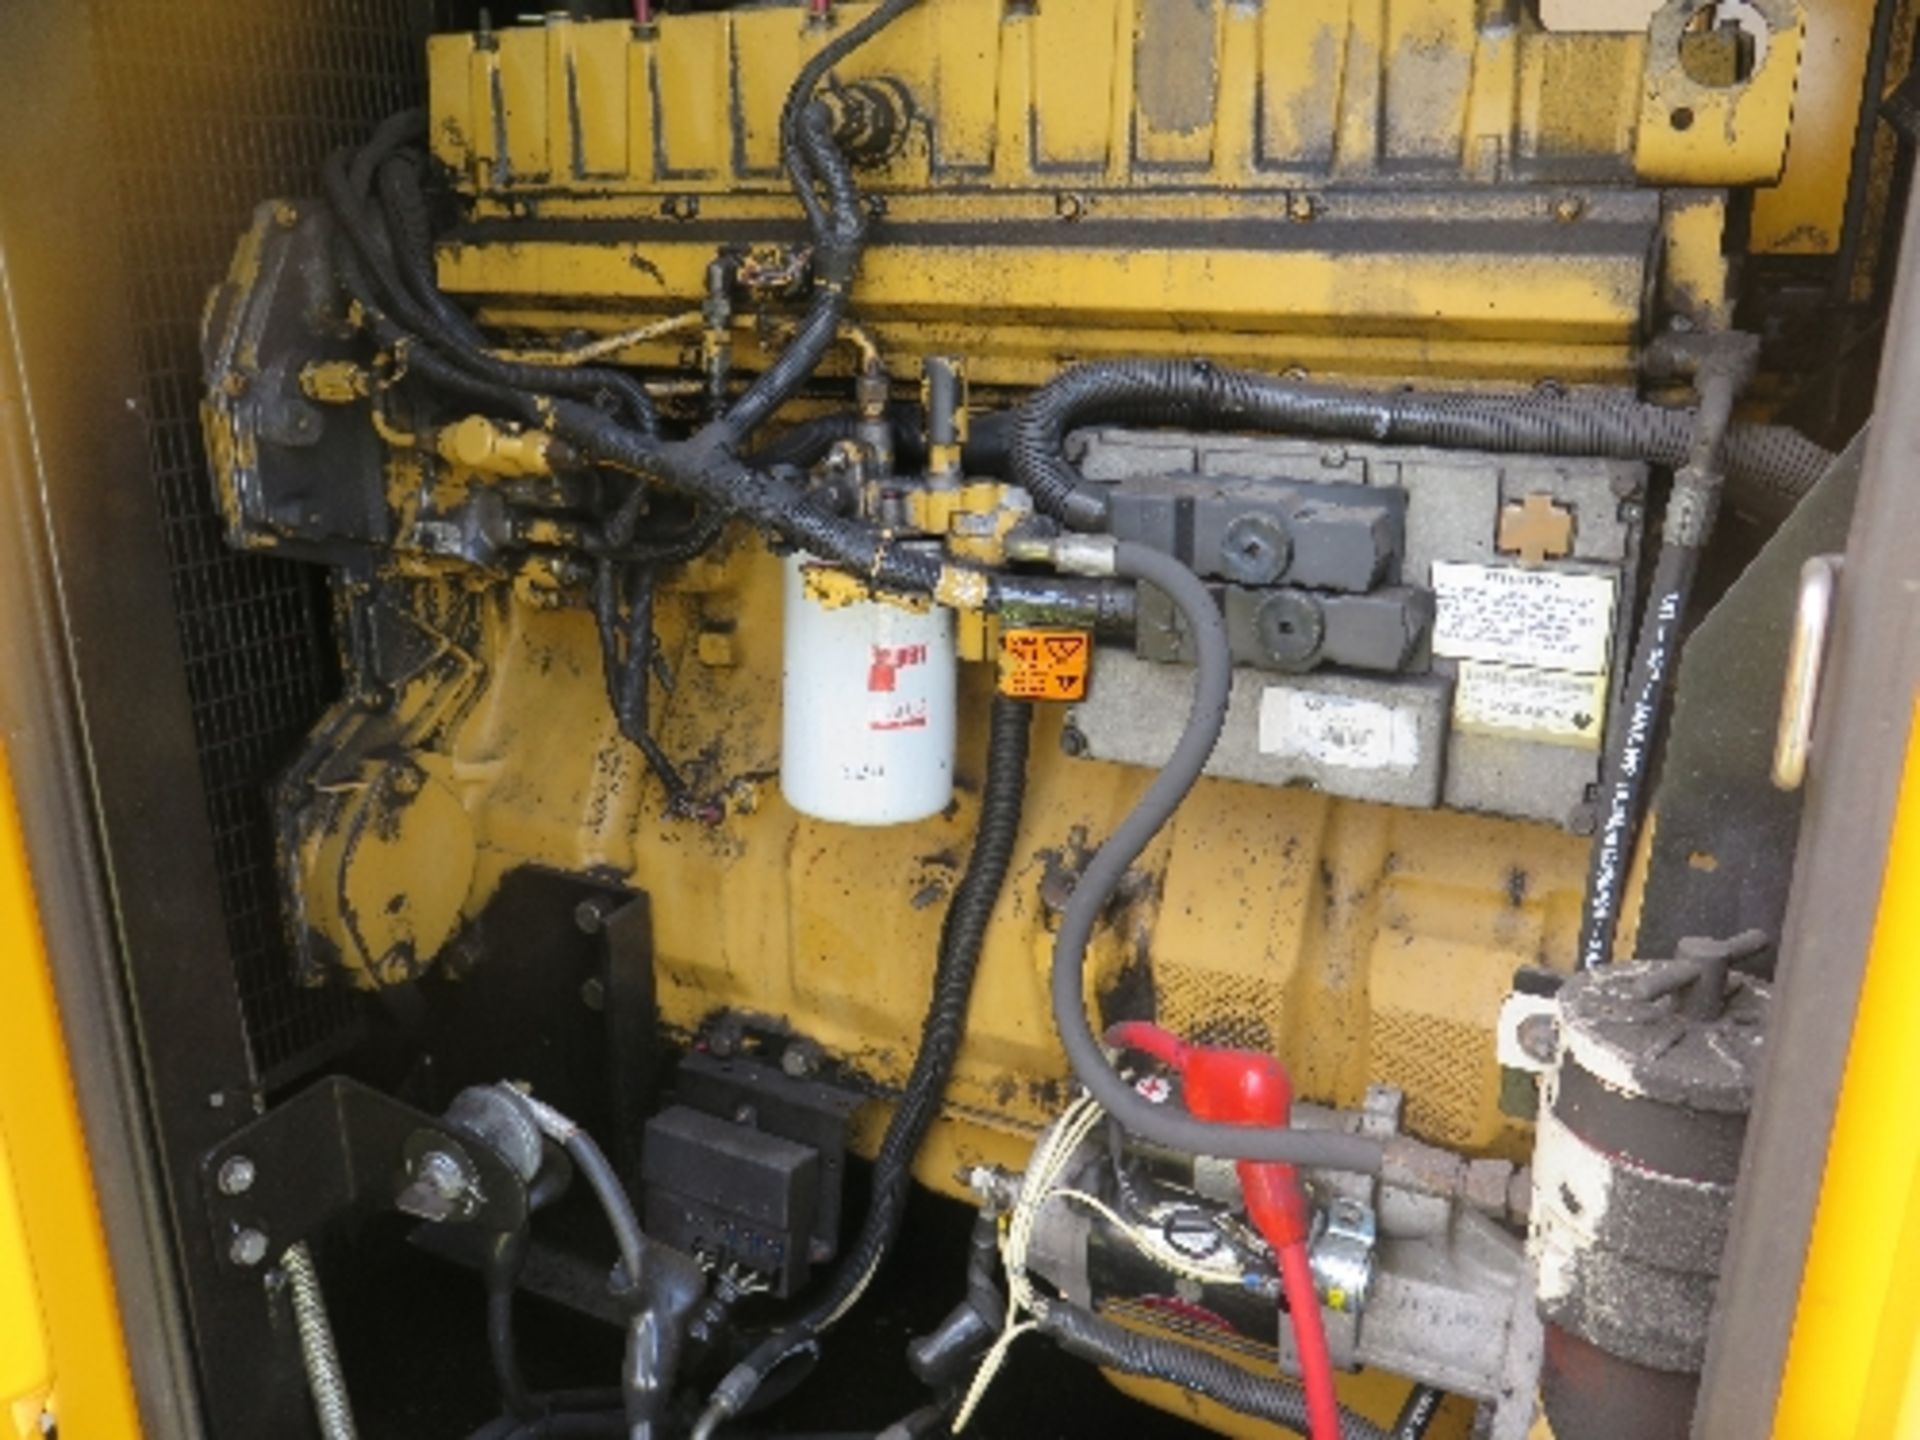 Caterpillar XQE200 generator 14617 hrs 157824
PERKINS - RUNS AND MAKES POWER
ENGINE ALTERNATOR - Image 2 of 7